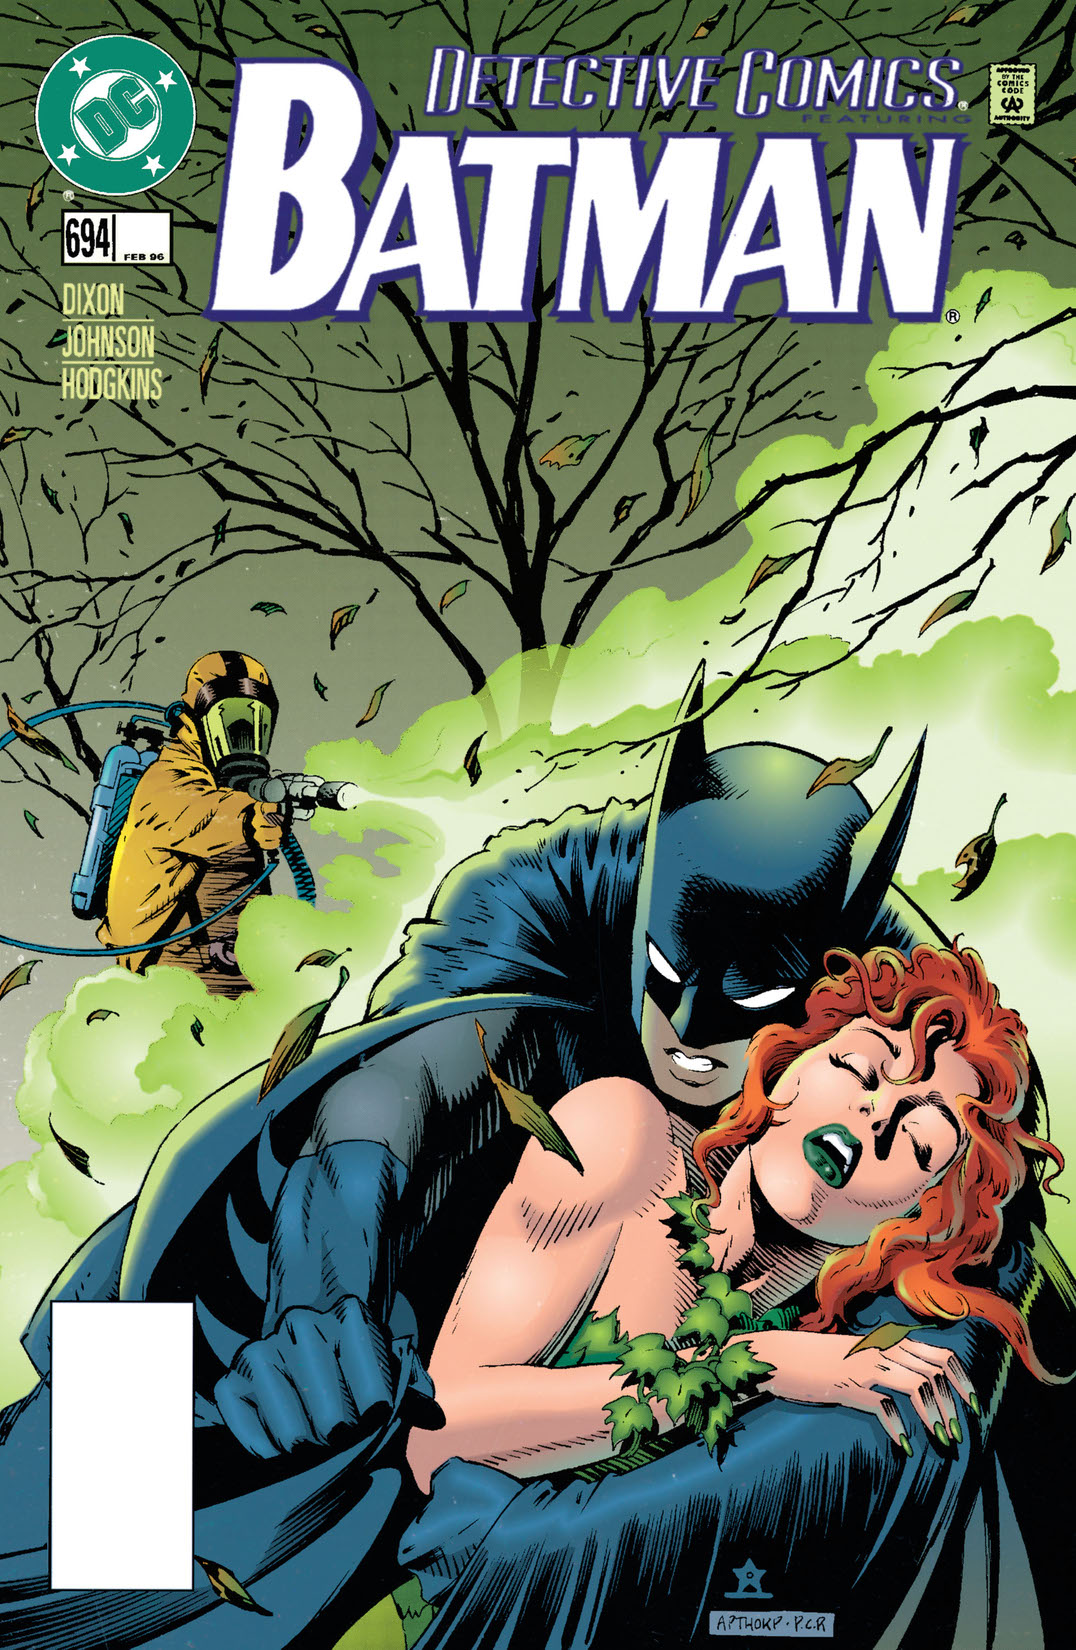 Detective Comics (1937-) #694 preview images